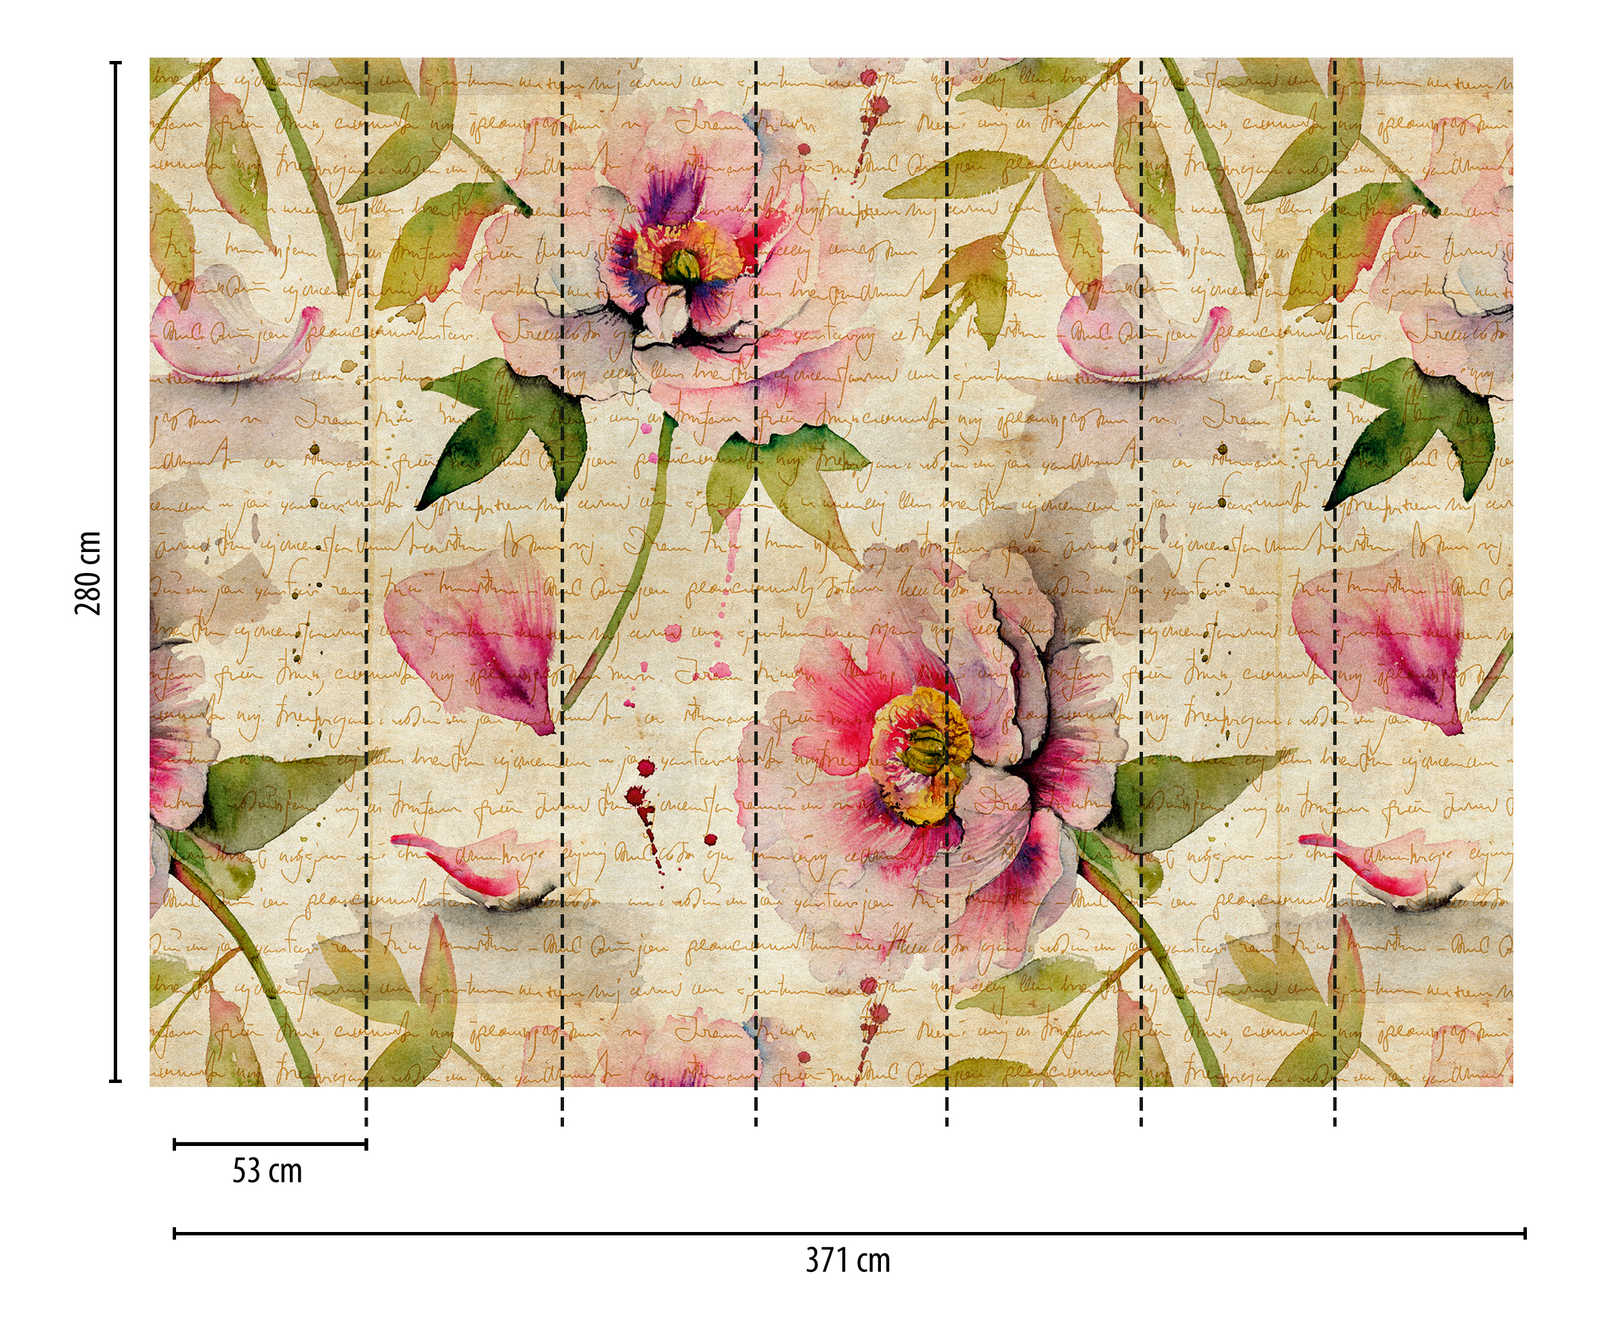             Wallpaper novelty - roses motif wallpaper vintage & cottage core style
        